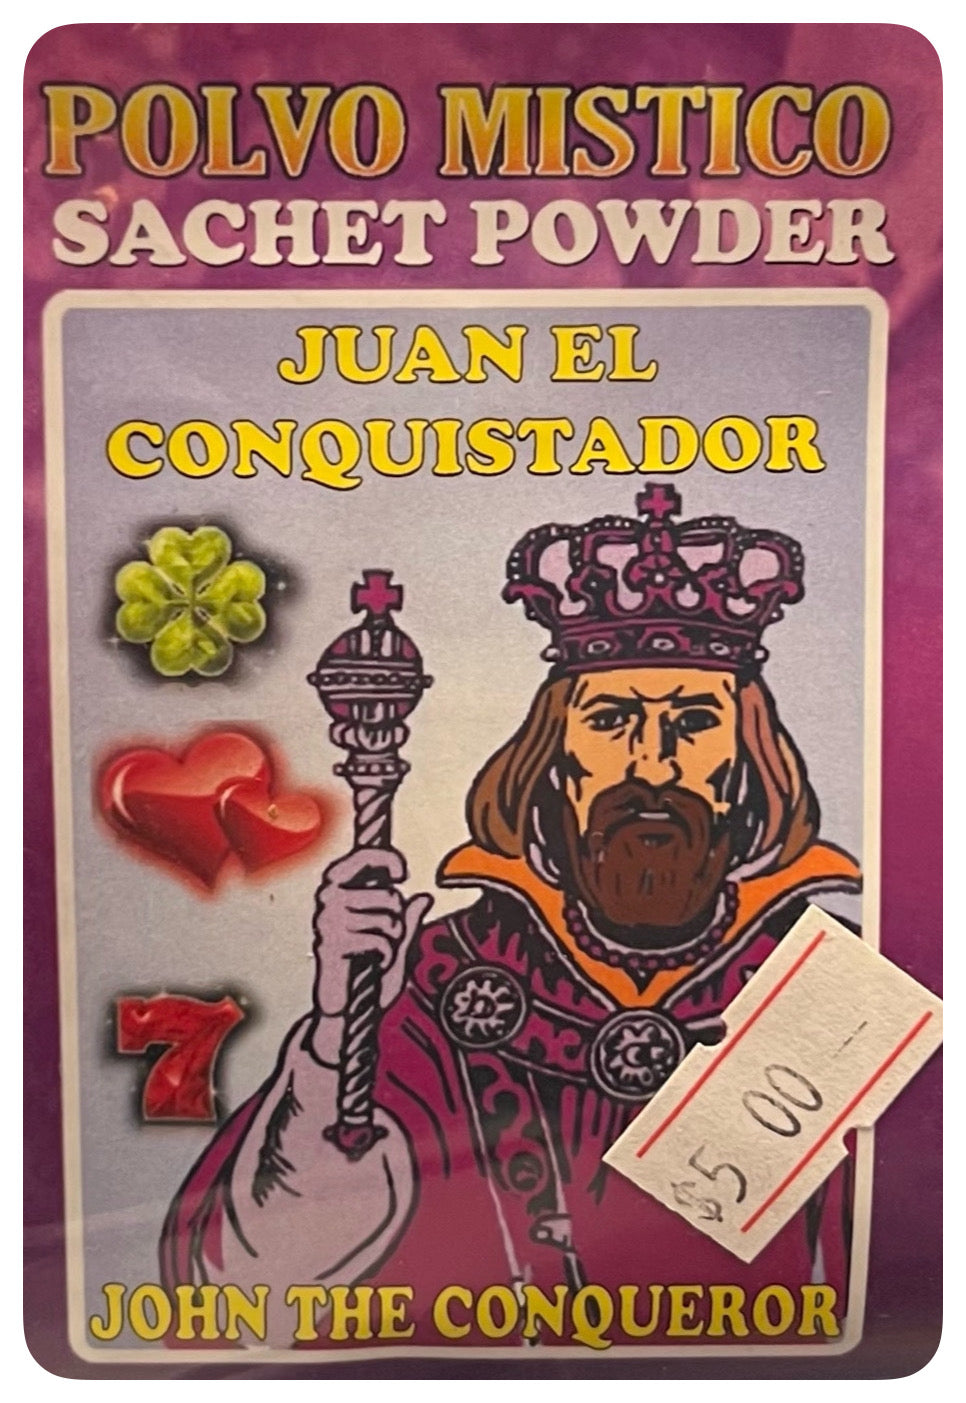 Sachet Powders